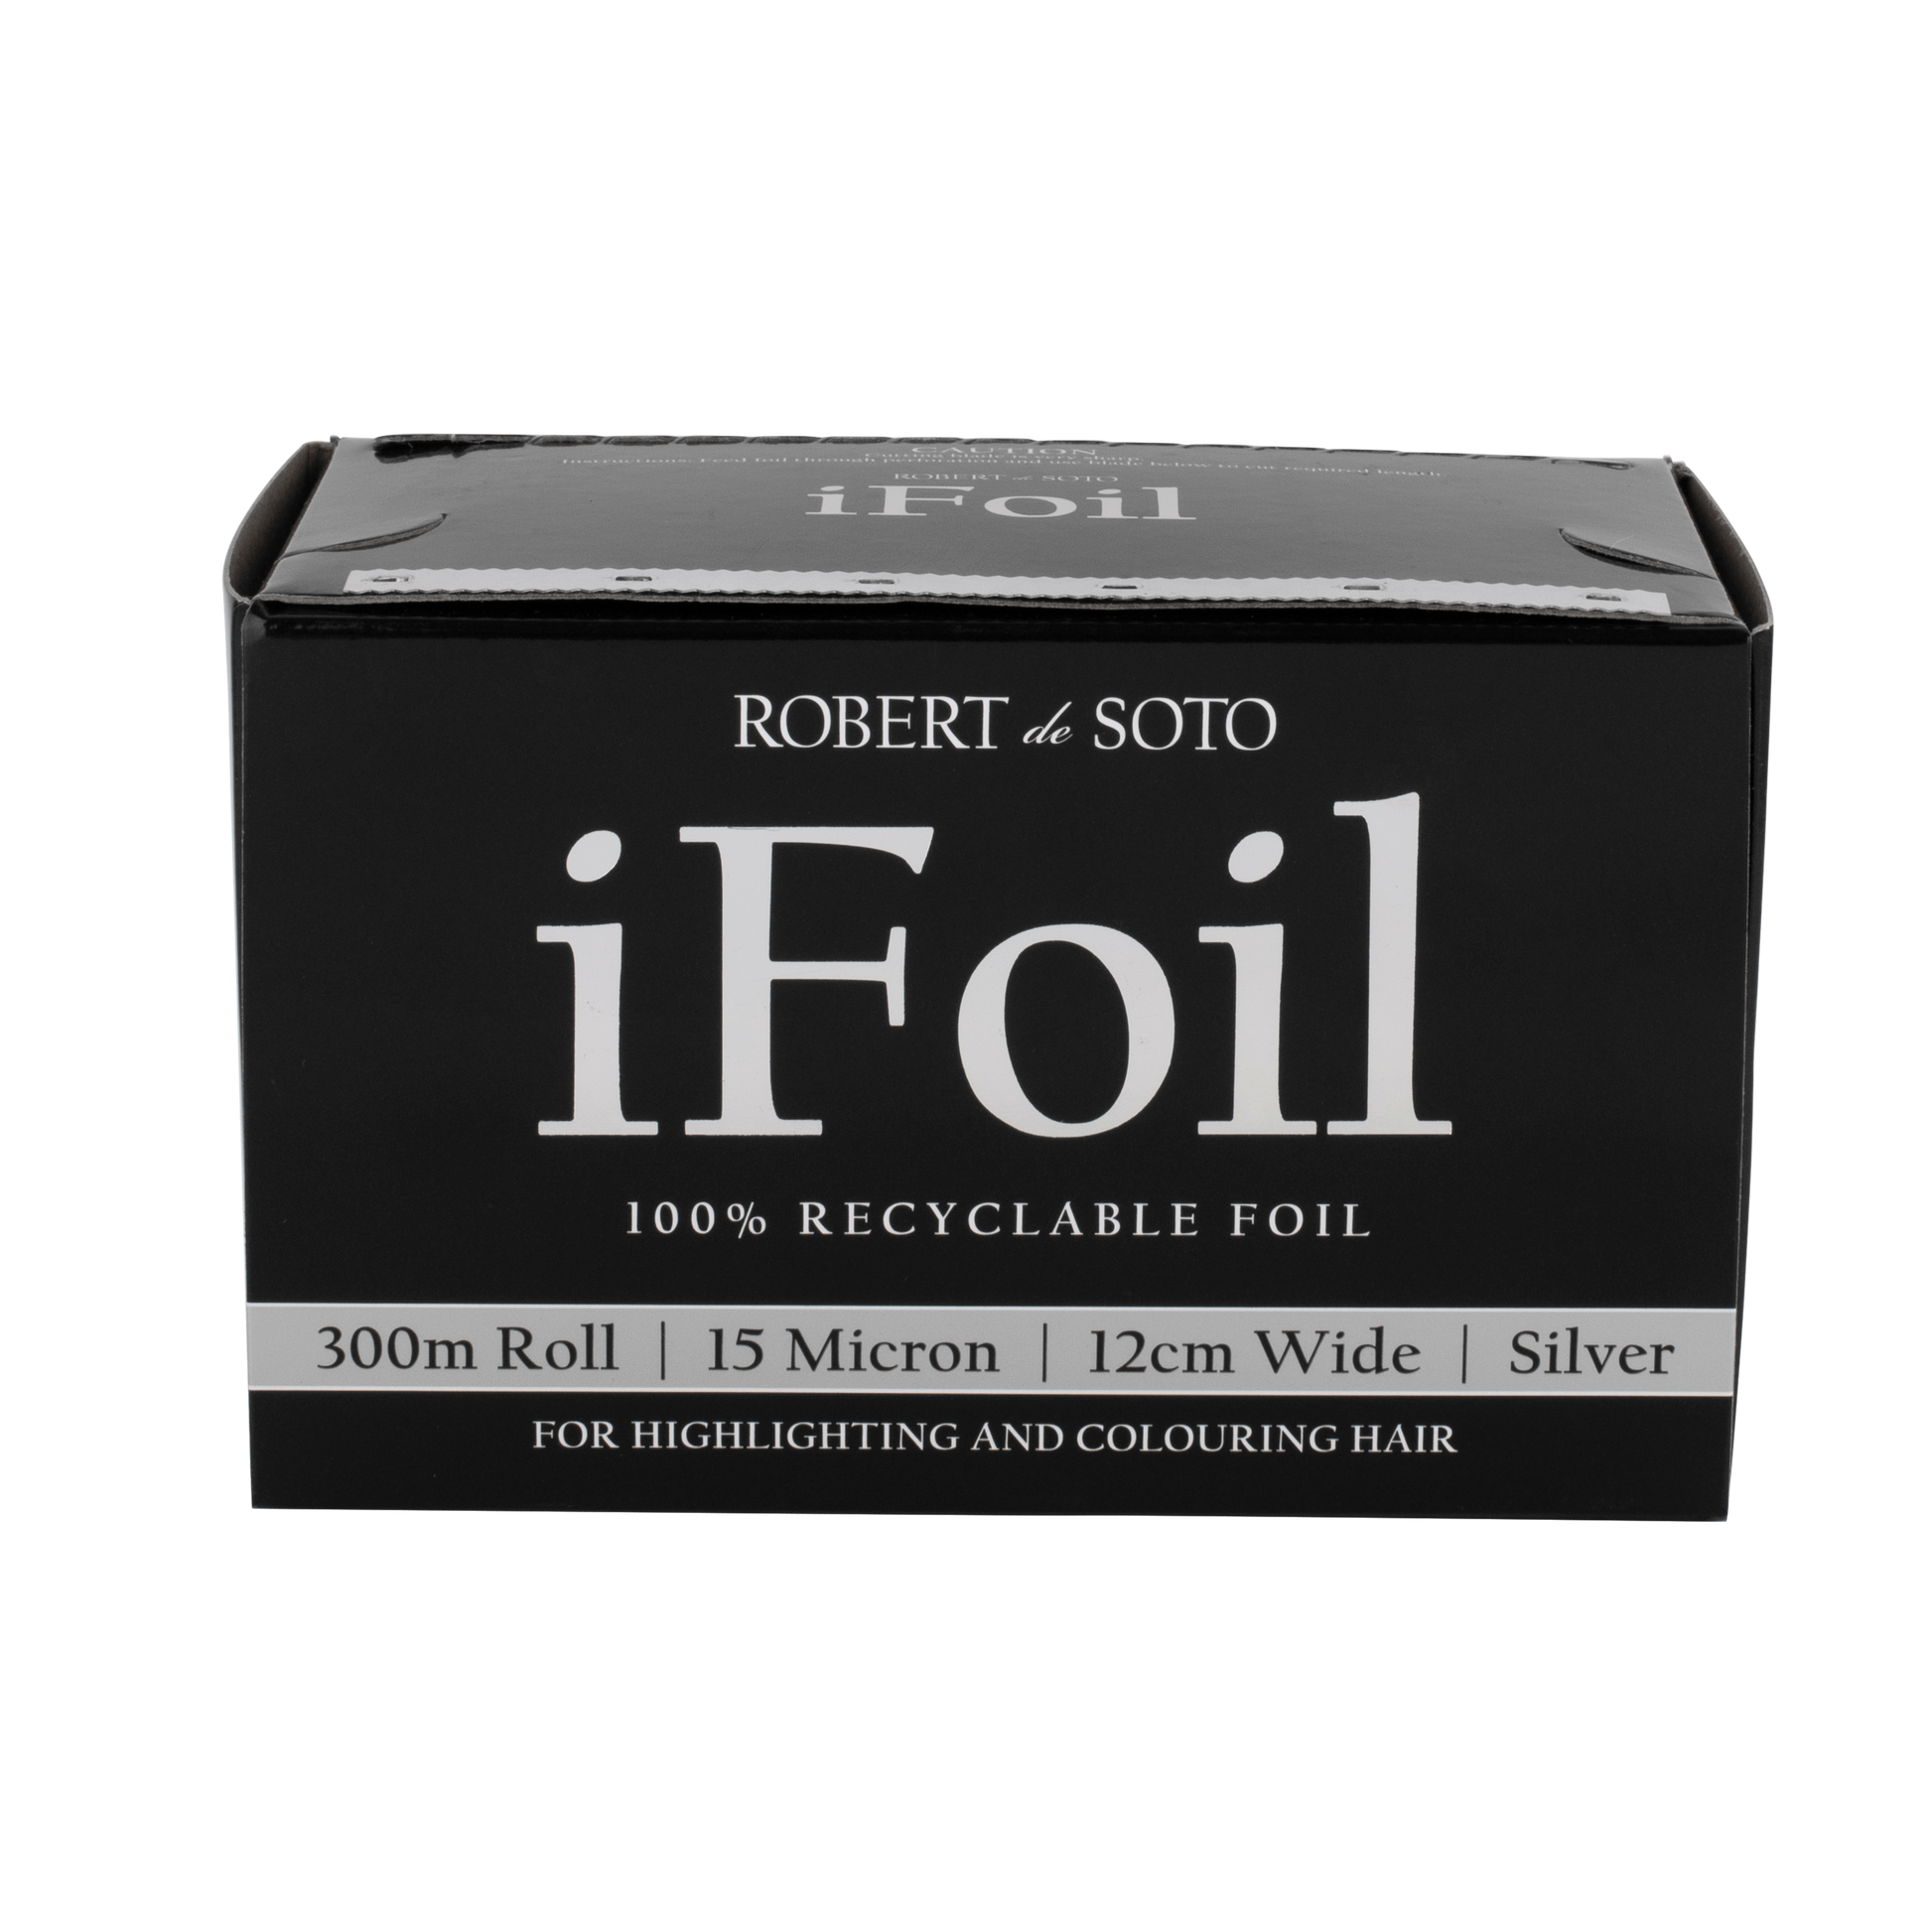 Robert Desoto Ifoil 15 Micron Foil 300m X 125mm - Silver